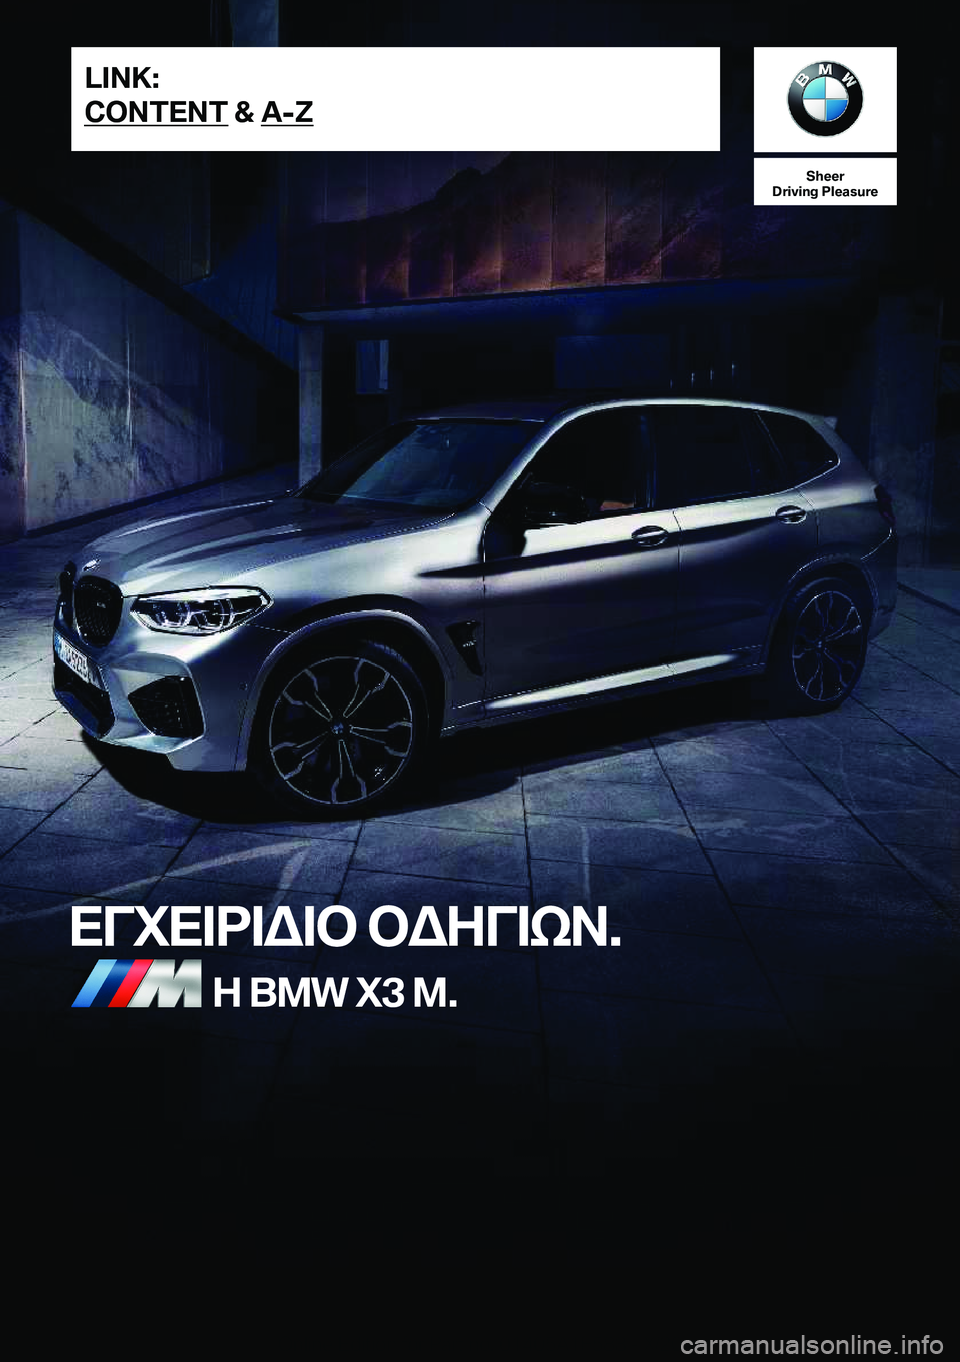 BMW X3 M 2021  ΟΔΗΓΌΣ ΧΡΉΣΗΣ (in Greek) �S�h�e�e�r
�D�r�i�v�i�n�g��P�l�e�a�s�u�r�e
XViX=d=W=b�bWZV=kA�.Z��B�M�W��X�3��M�.�L�I�N�K�:
�C�O�N�T�E�N�T��&��A�-�Z�O�n�l�i�n�e��E�d�i�t�i�o�n��f�o�r��P�a�r�t��n�o�.��0�